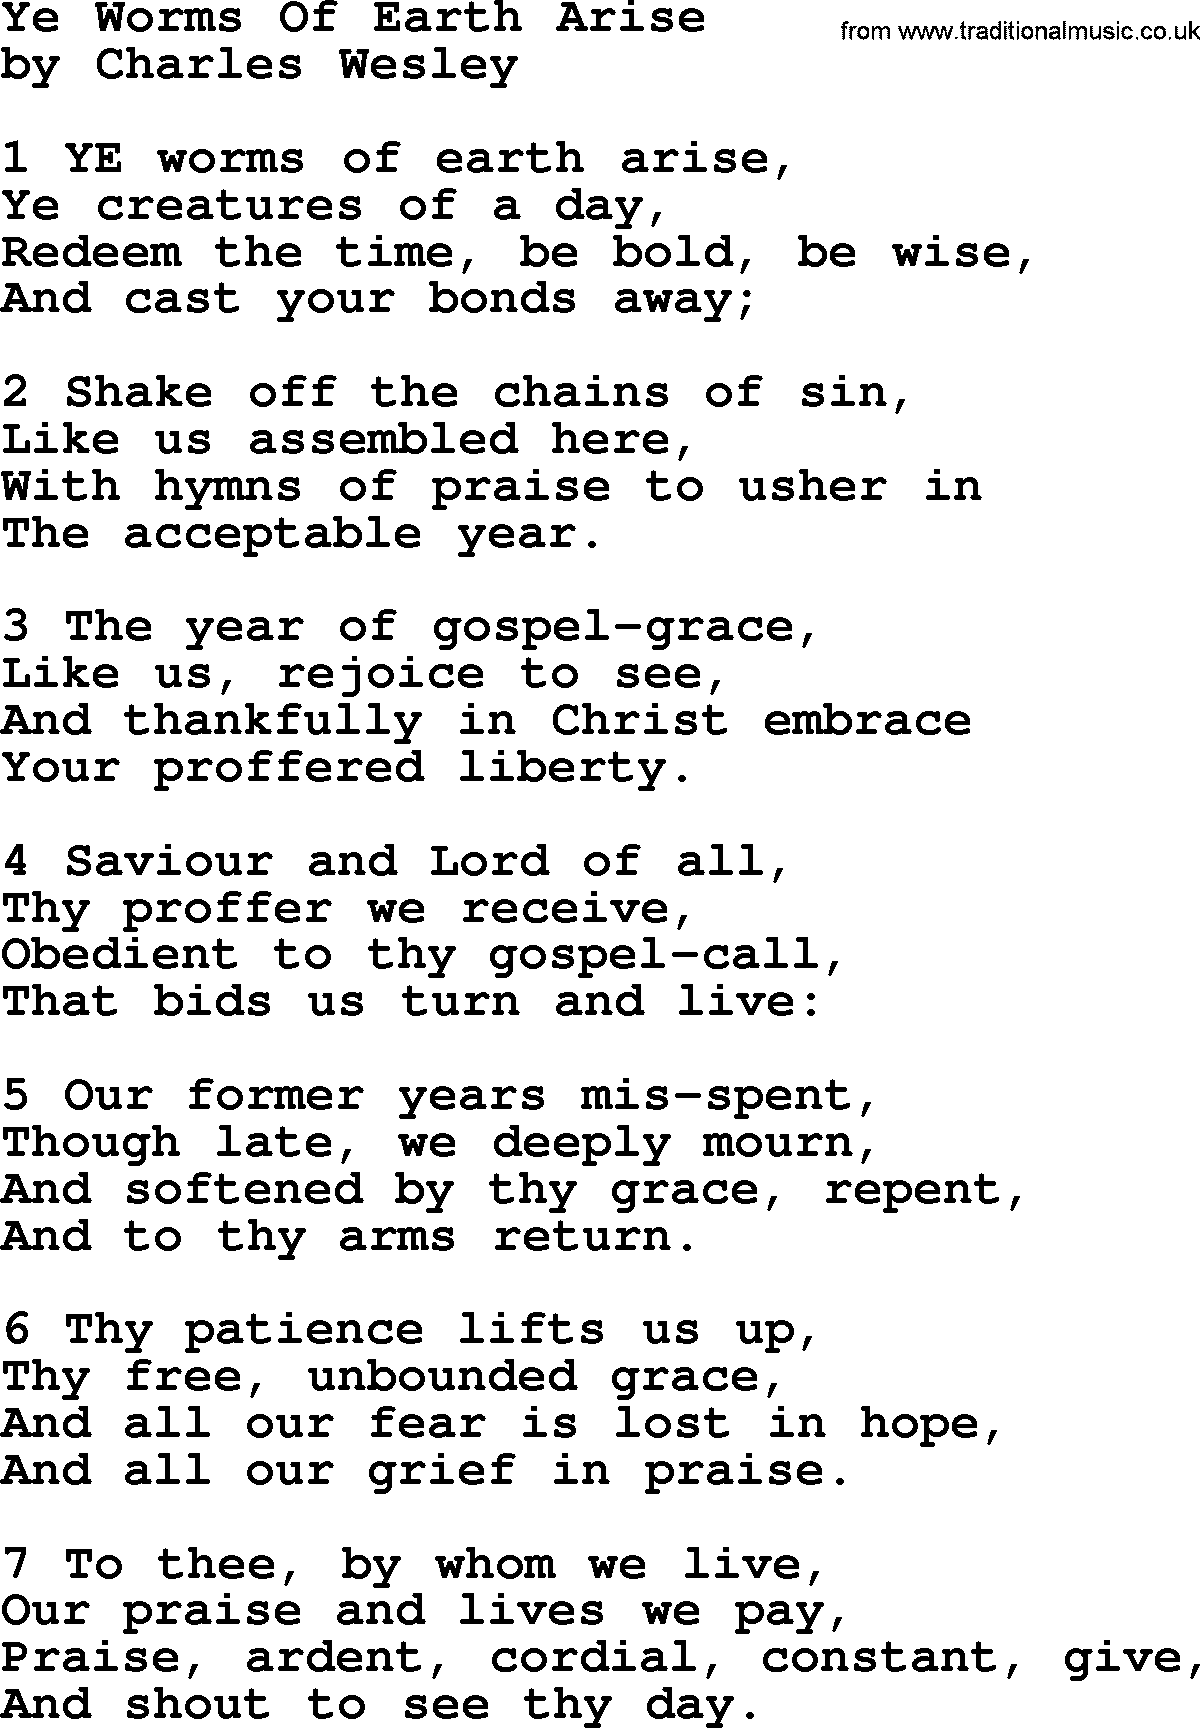 Charles Wesley hymn: Ye Worms Of Earth Arise, lyrics